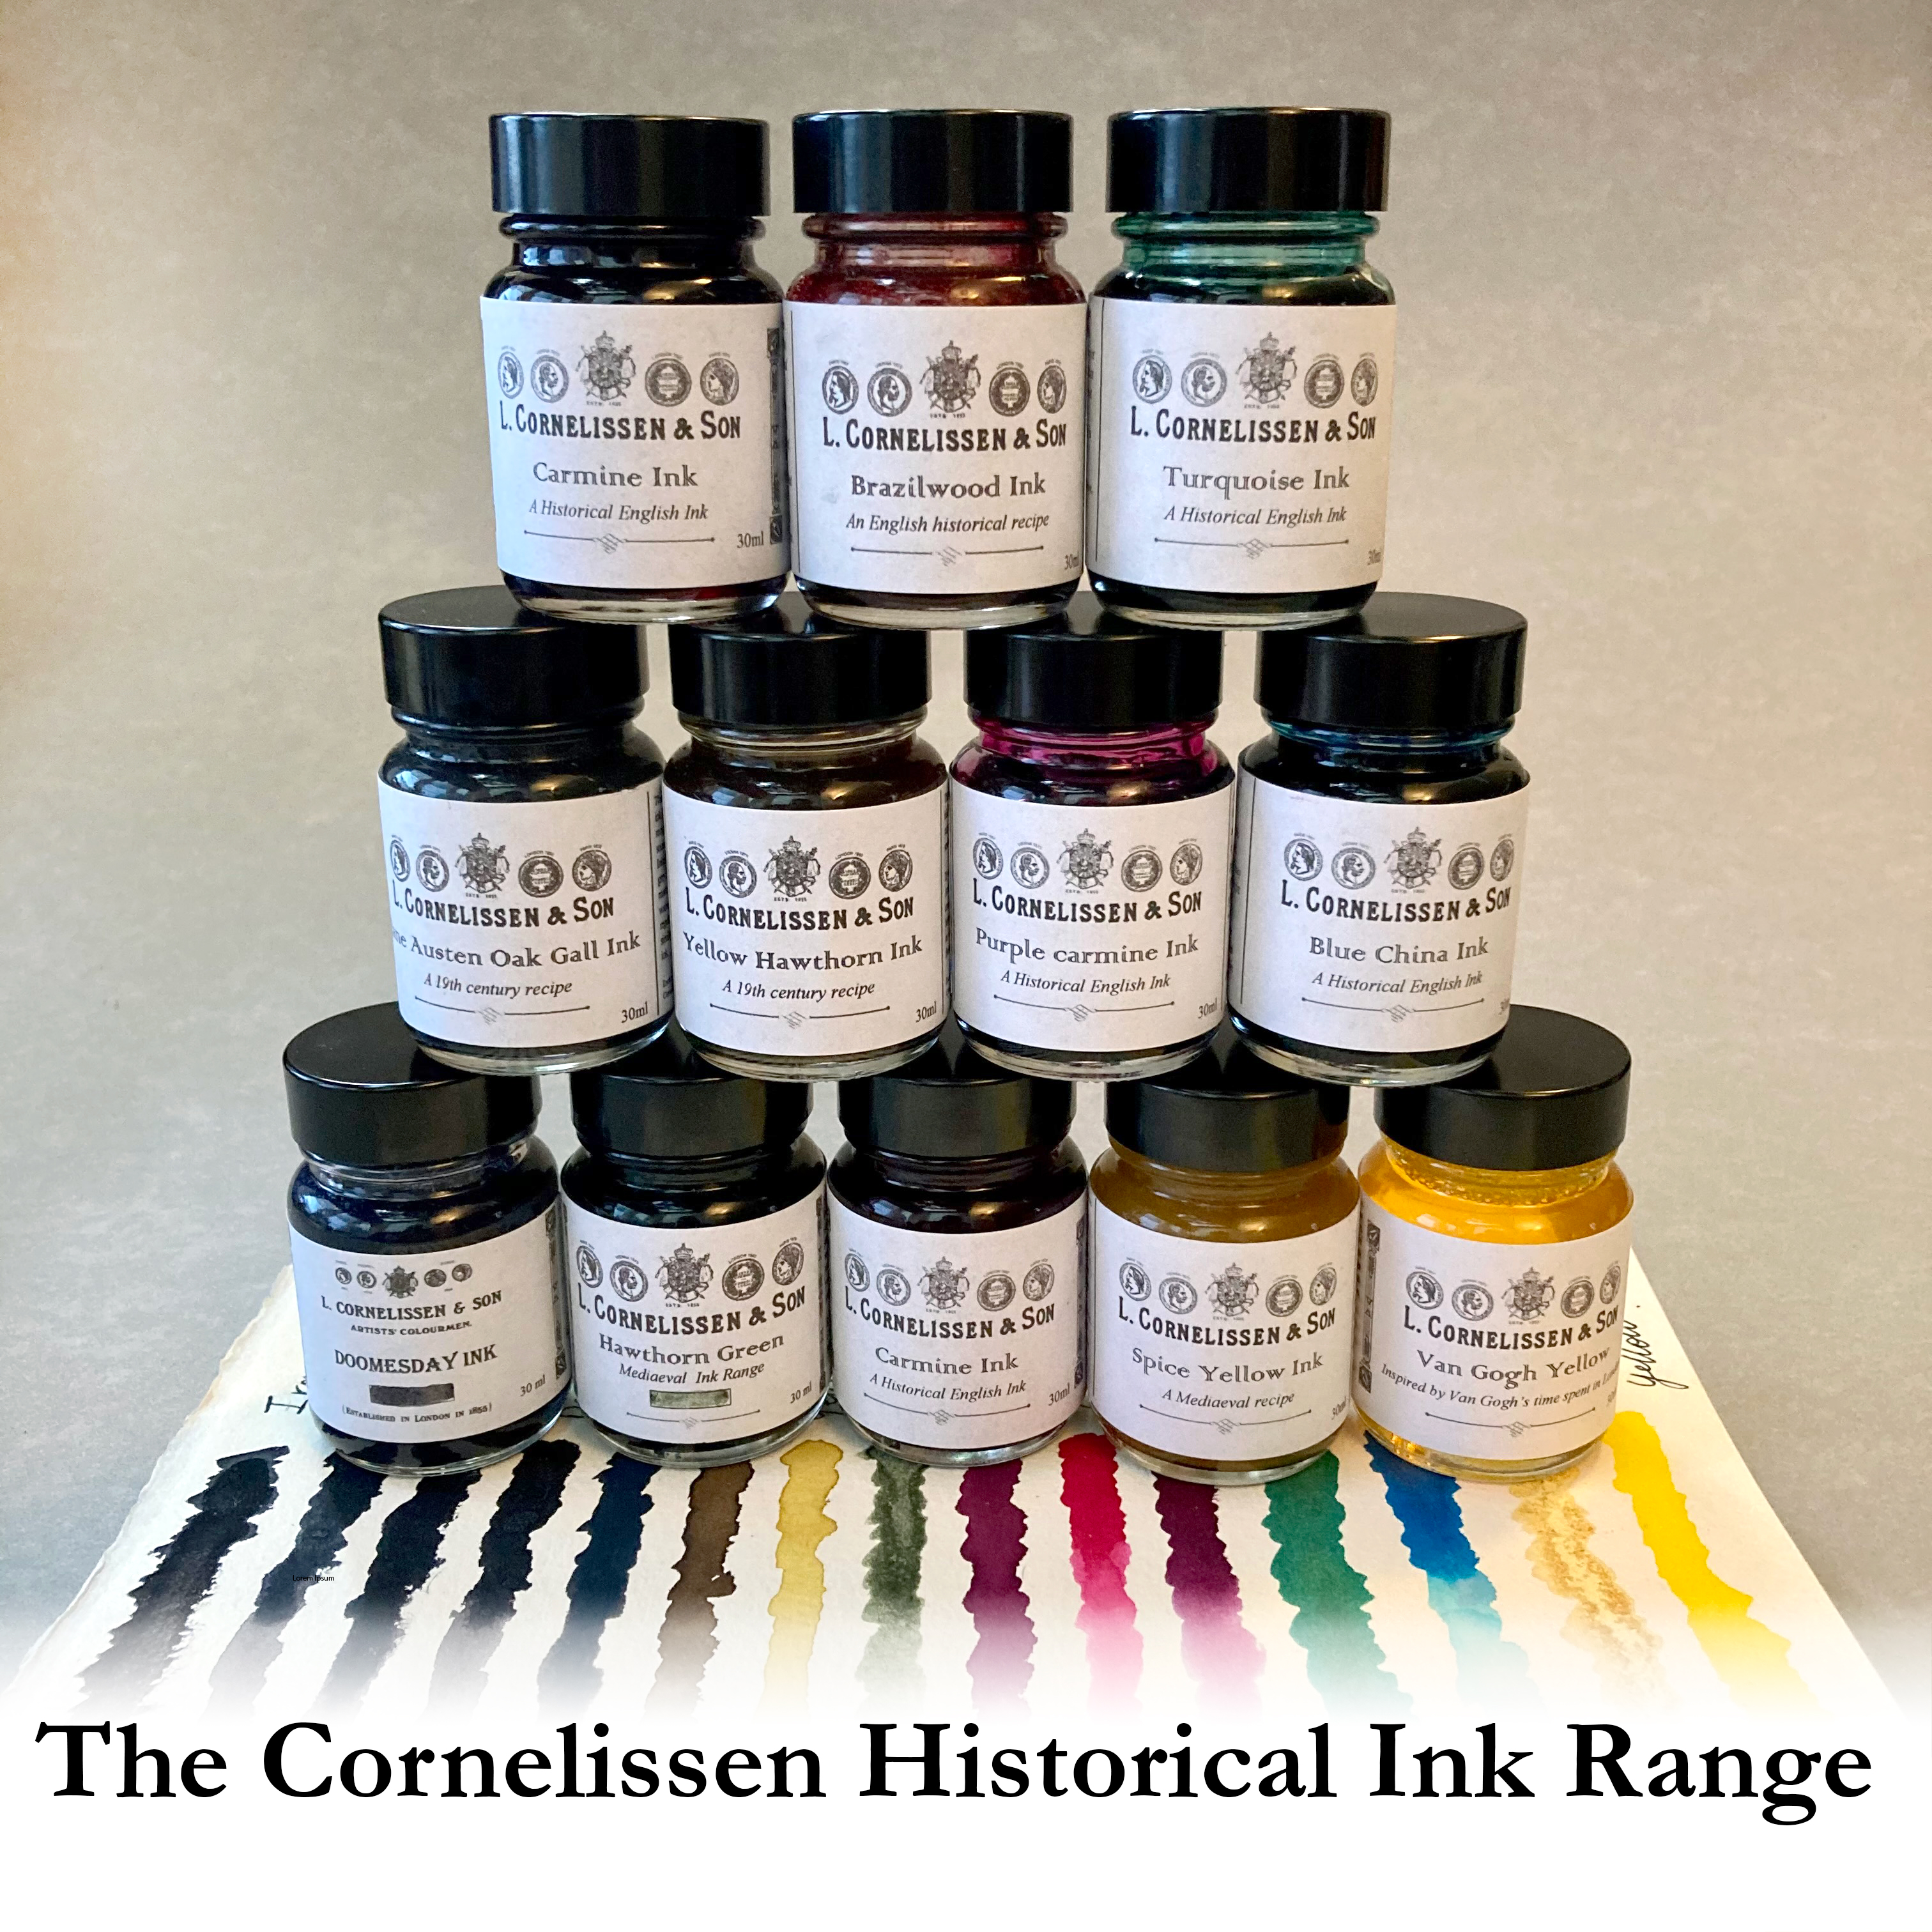 The Cornelissen Historical Ink Range